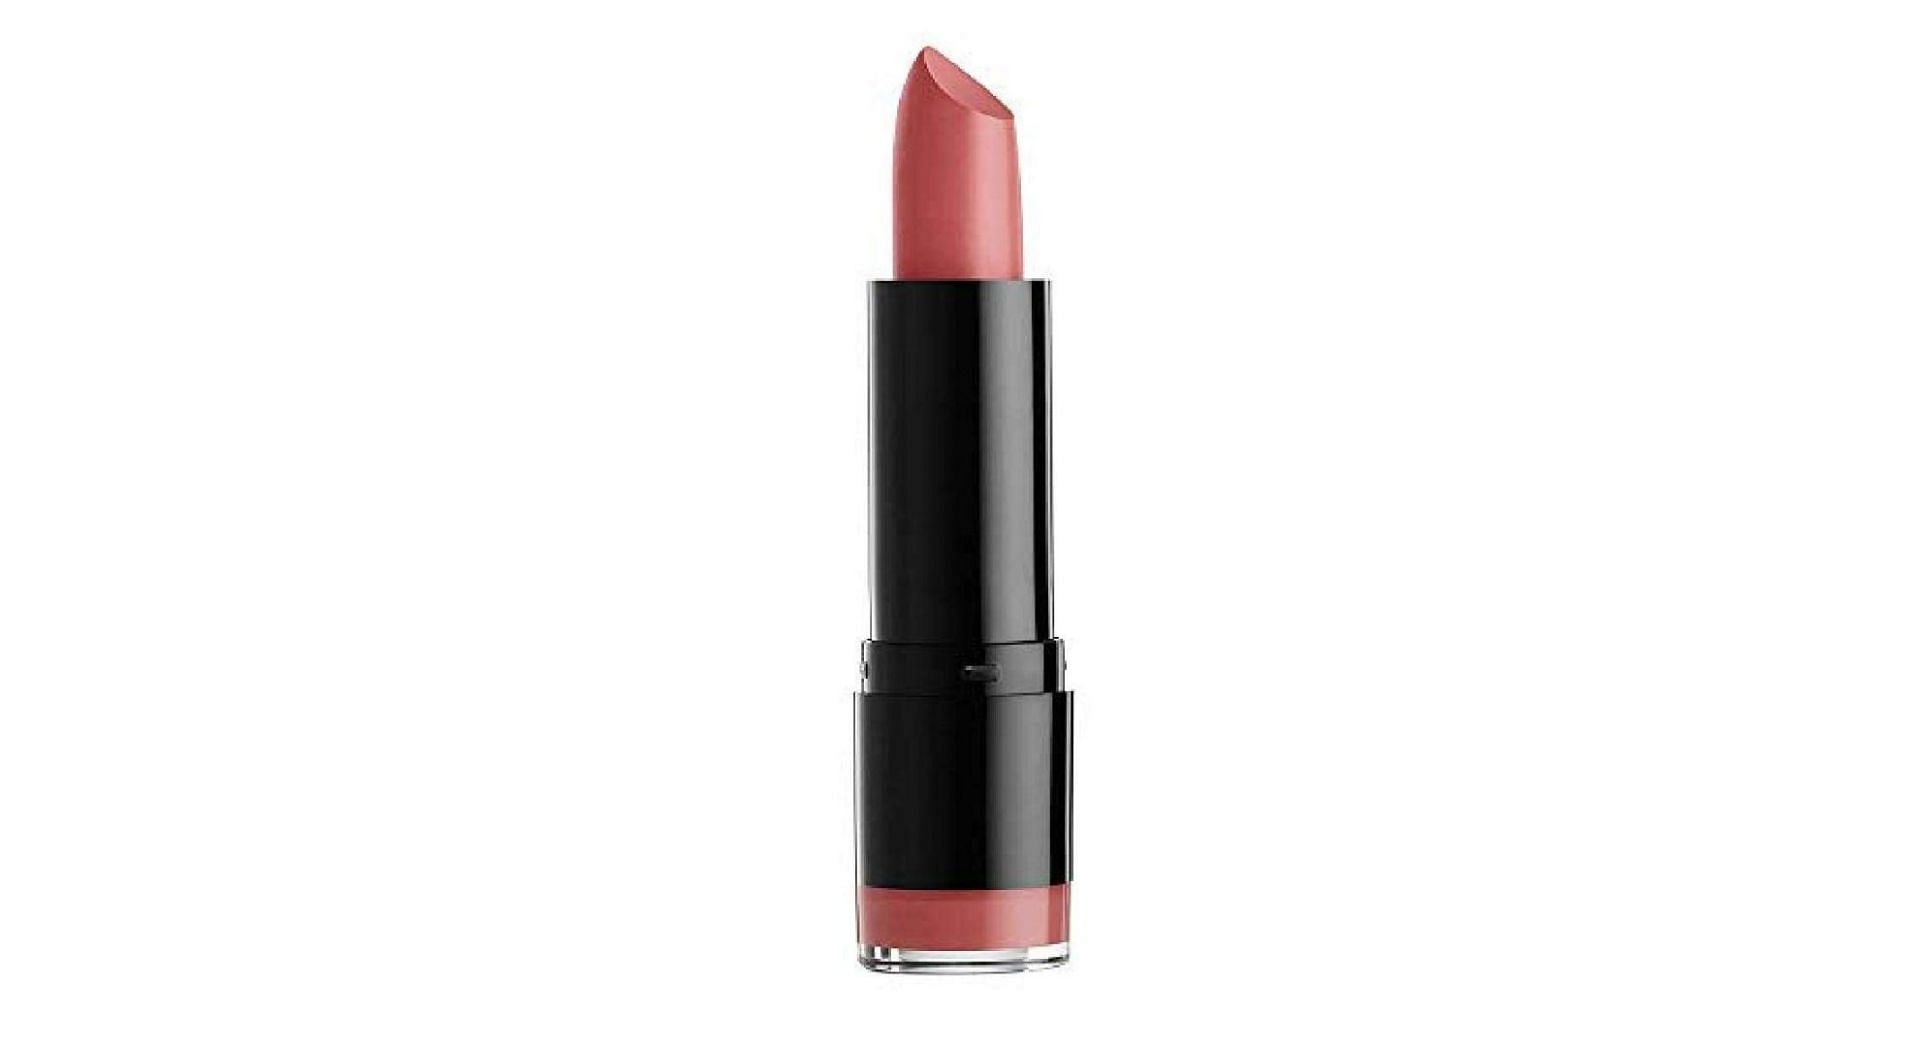 NYX PROFESSIONAL MAKEUP Extra Creamy Round Lipstick - B52 (Image via Amazon)